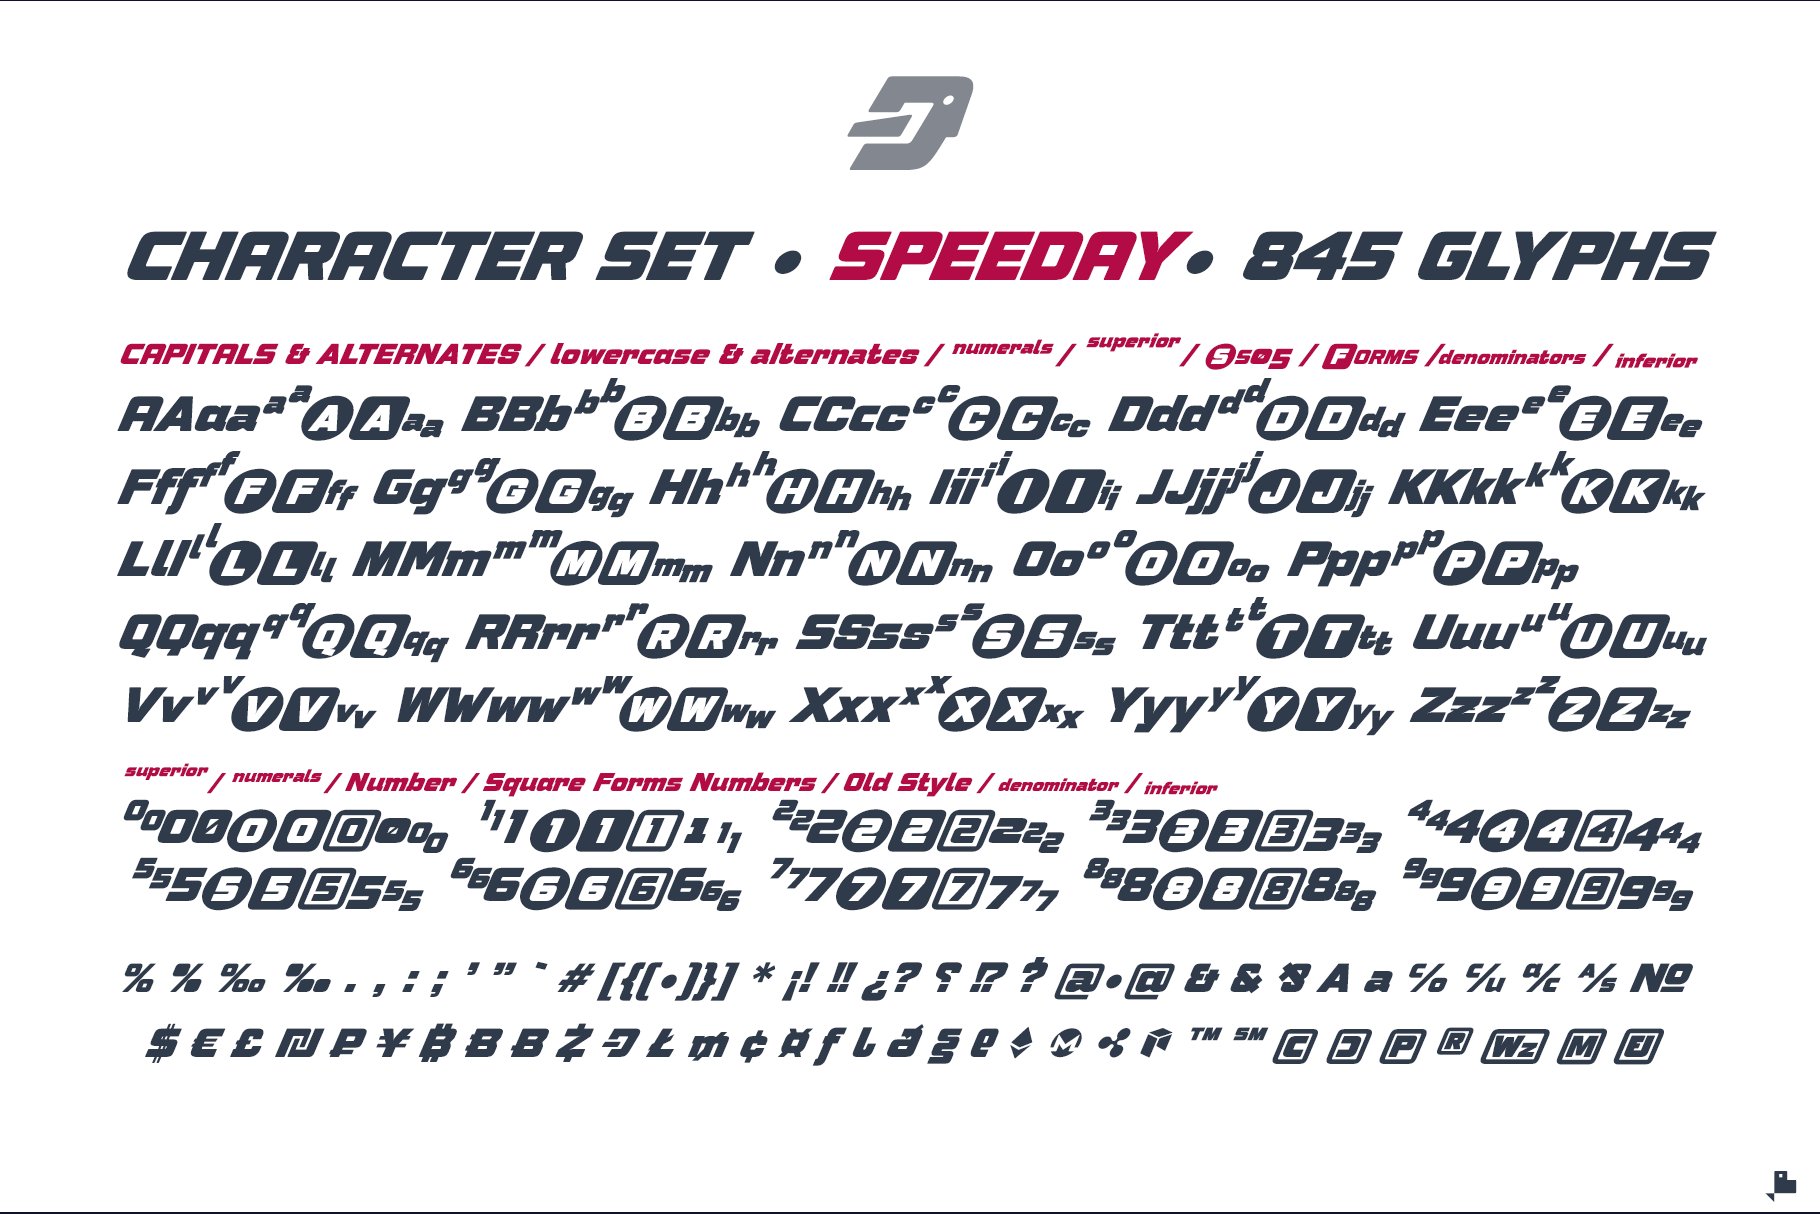 speeday character set 892